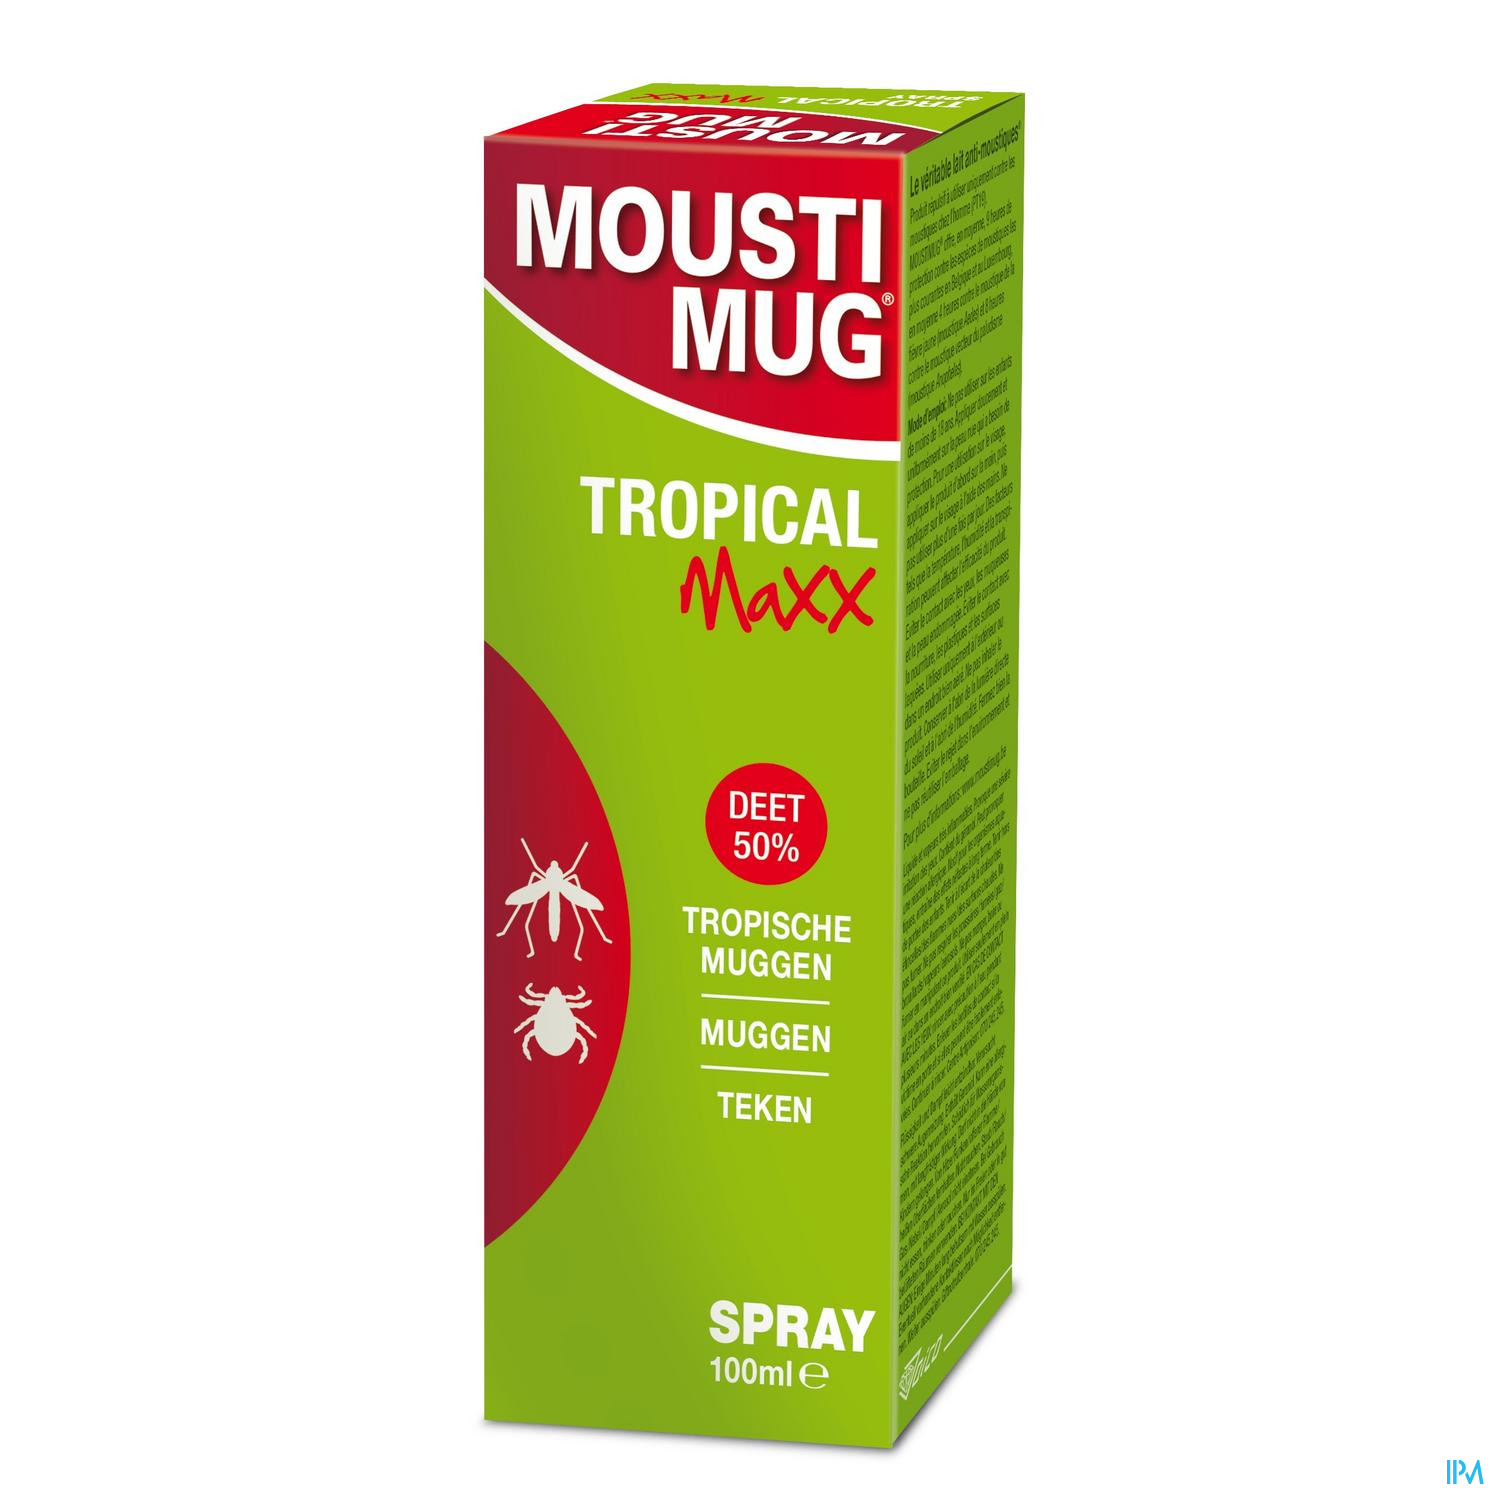 Image of Moustimug Tropical Maxx 50% DEET Spray 100ml 